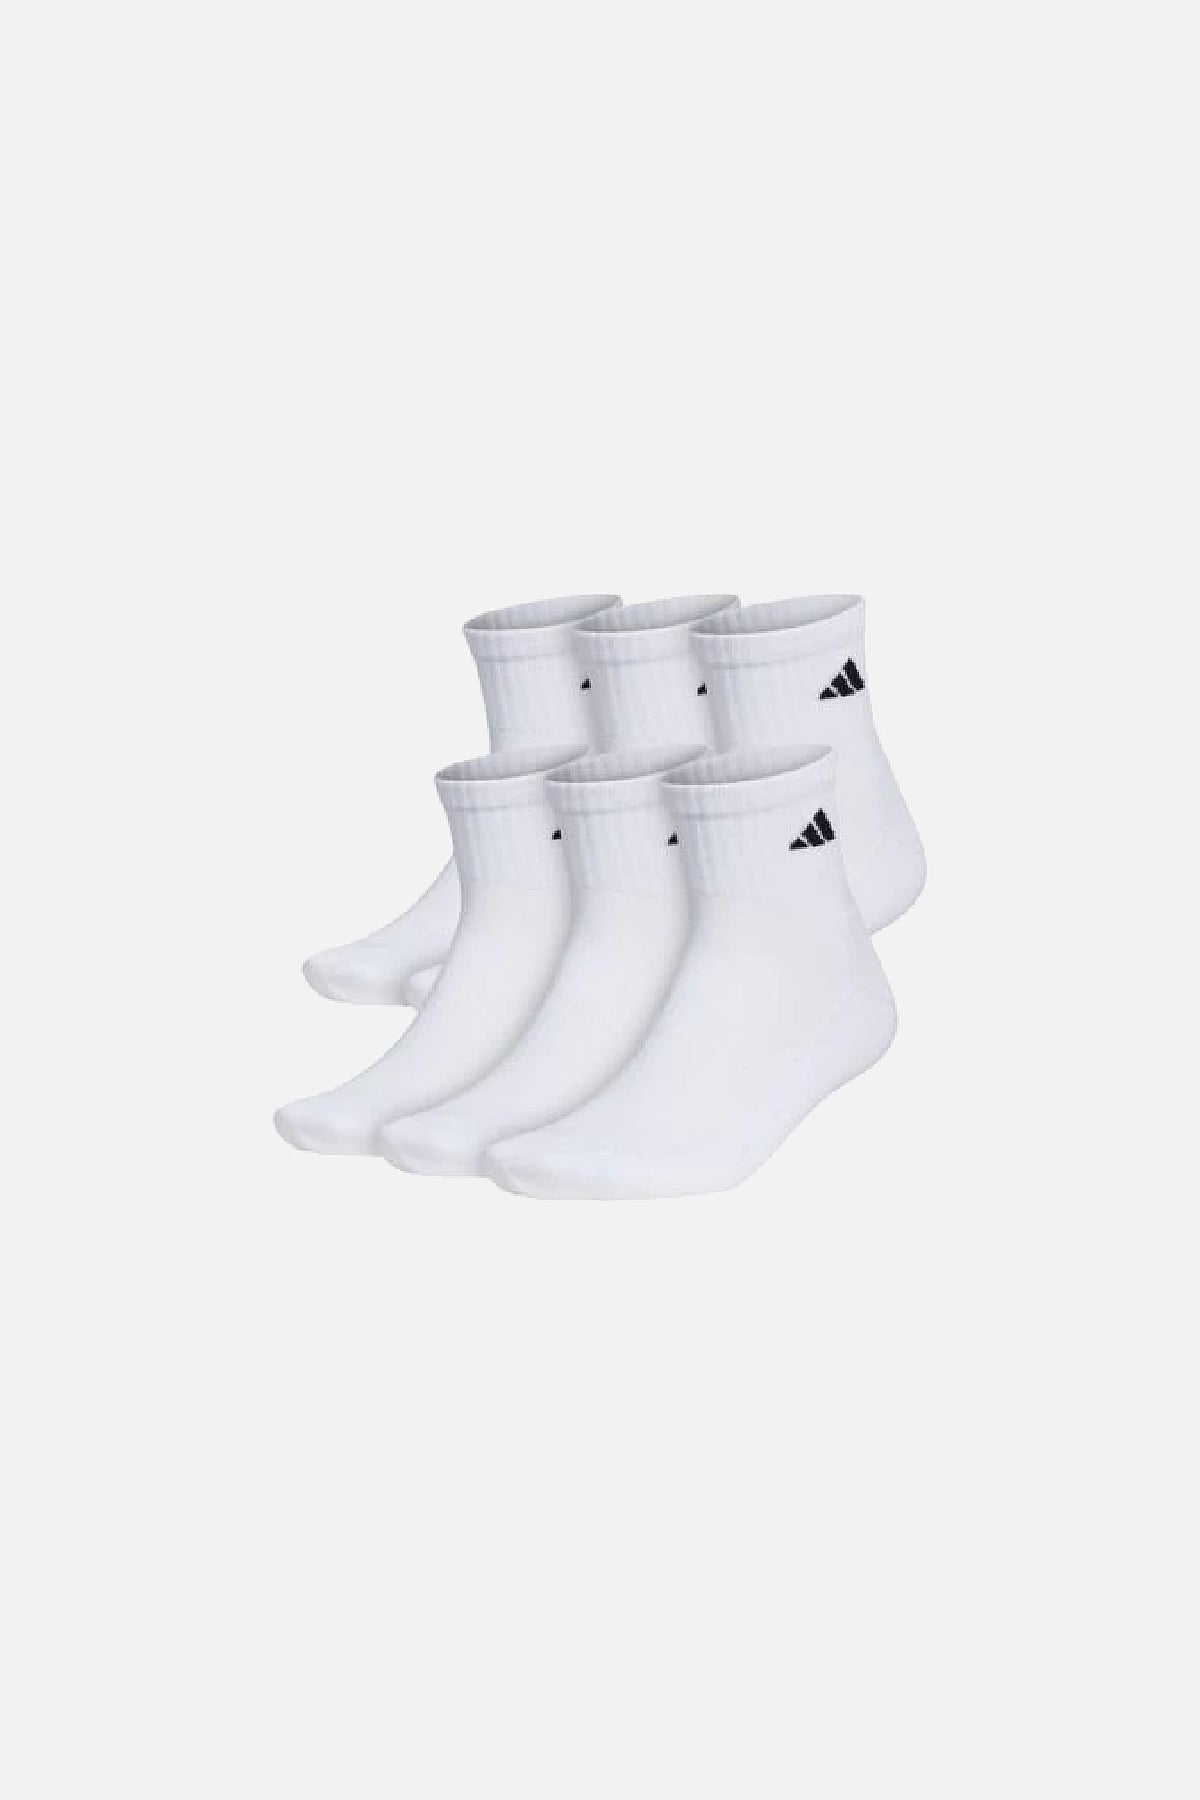 Adidas Mens 6 Pack Quarter Athletic Socks